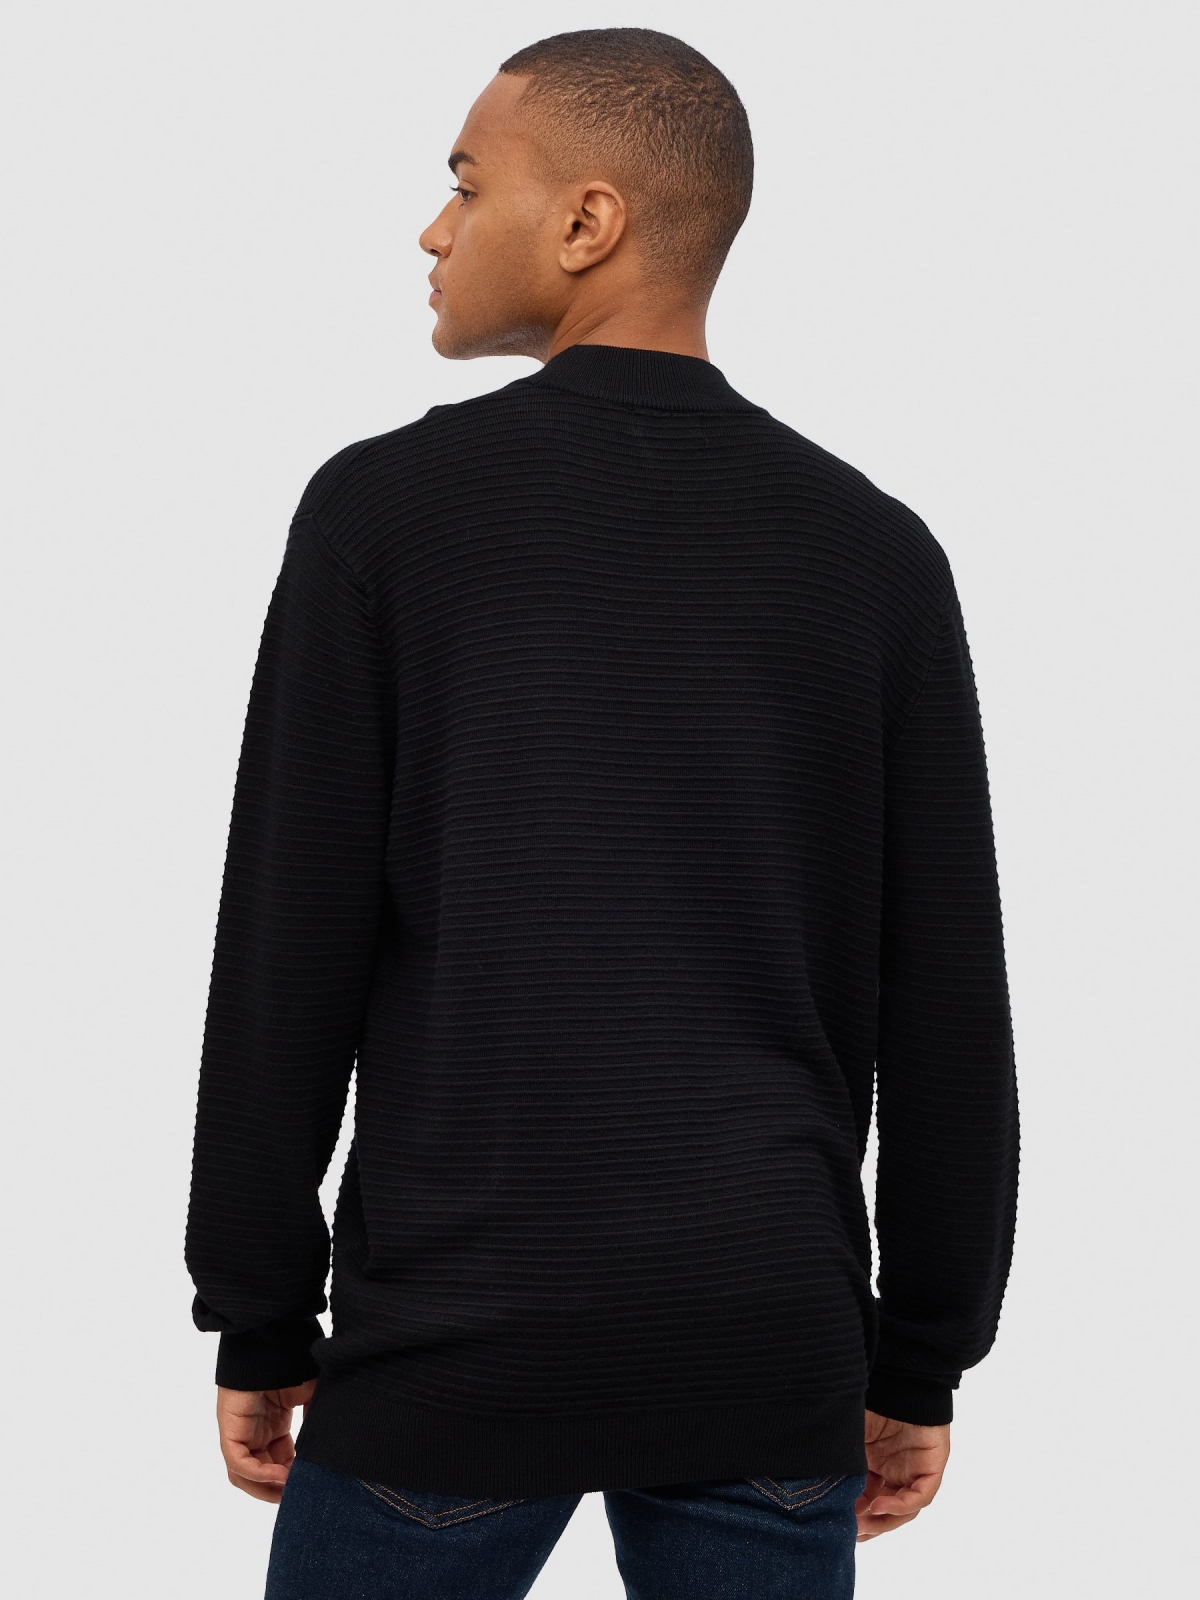 Regular sweater perkins collar black middle back view